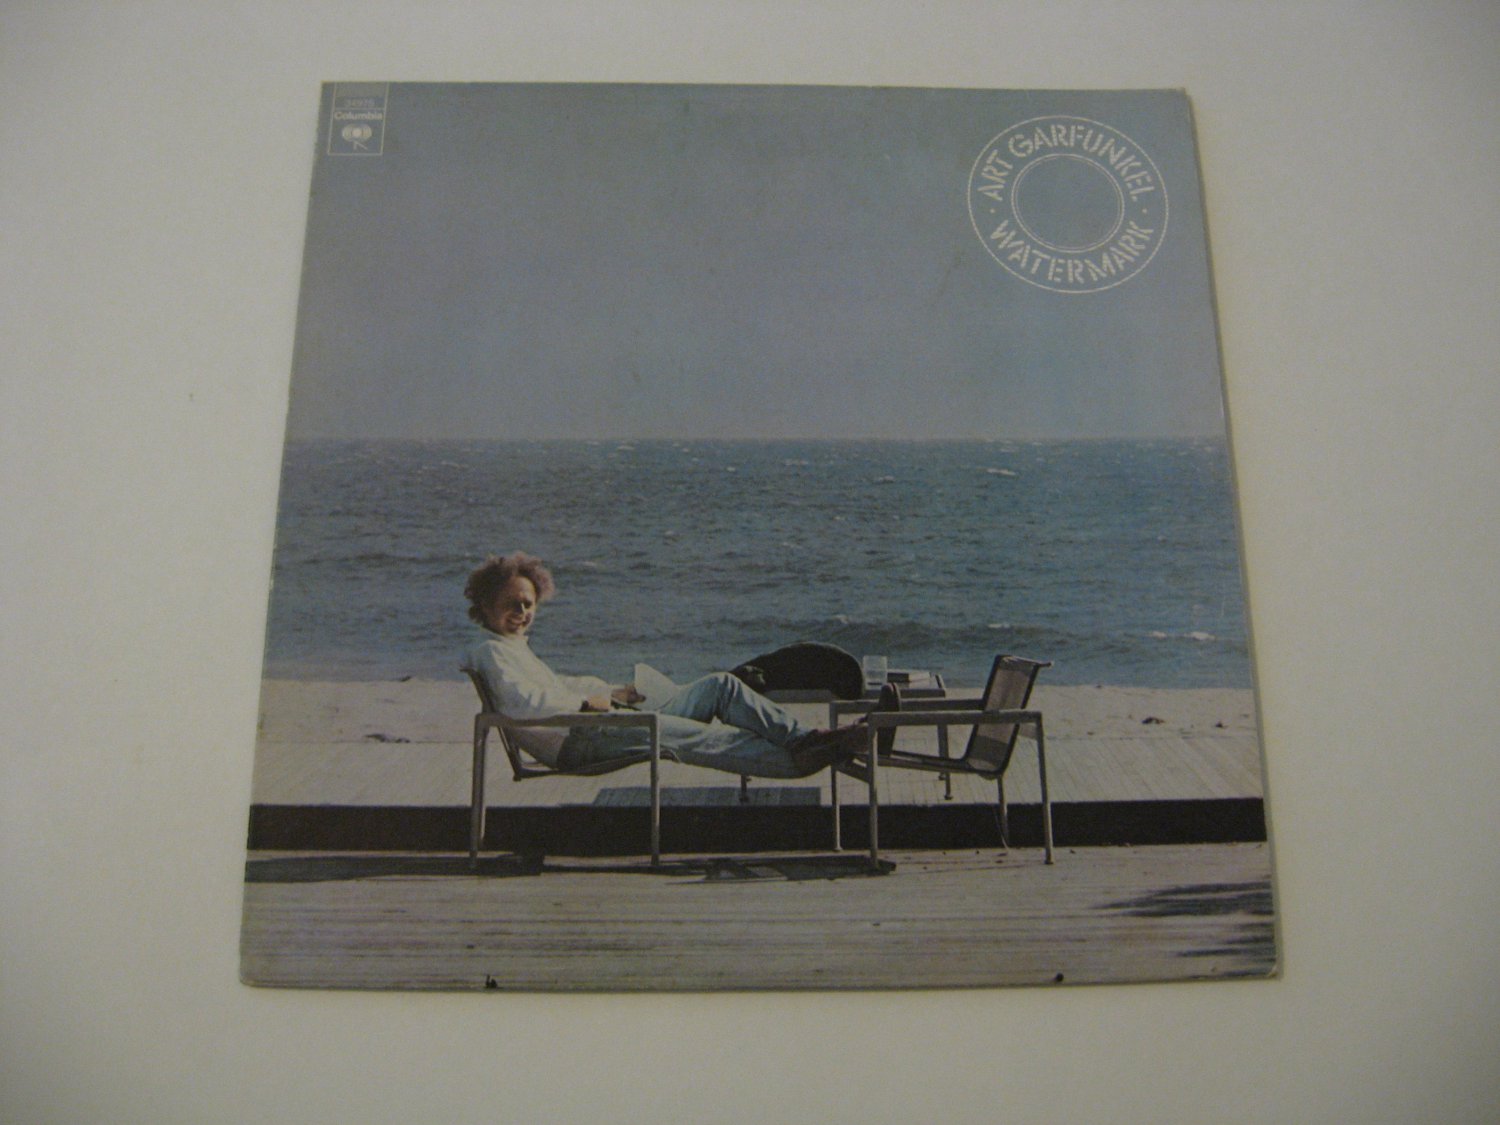 Art Garfunkel - Watermark - 1978 (Vinyl Record)